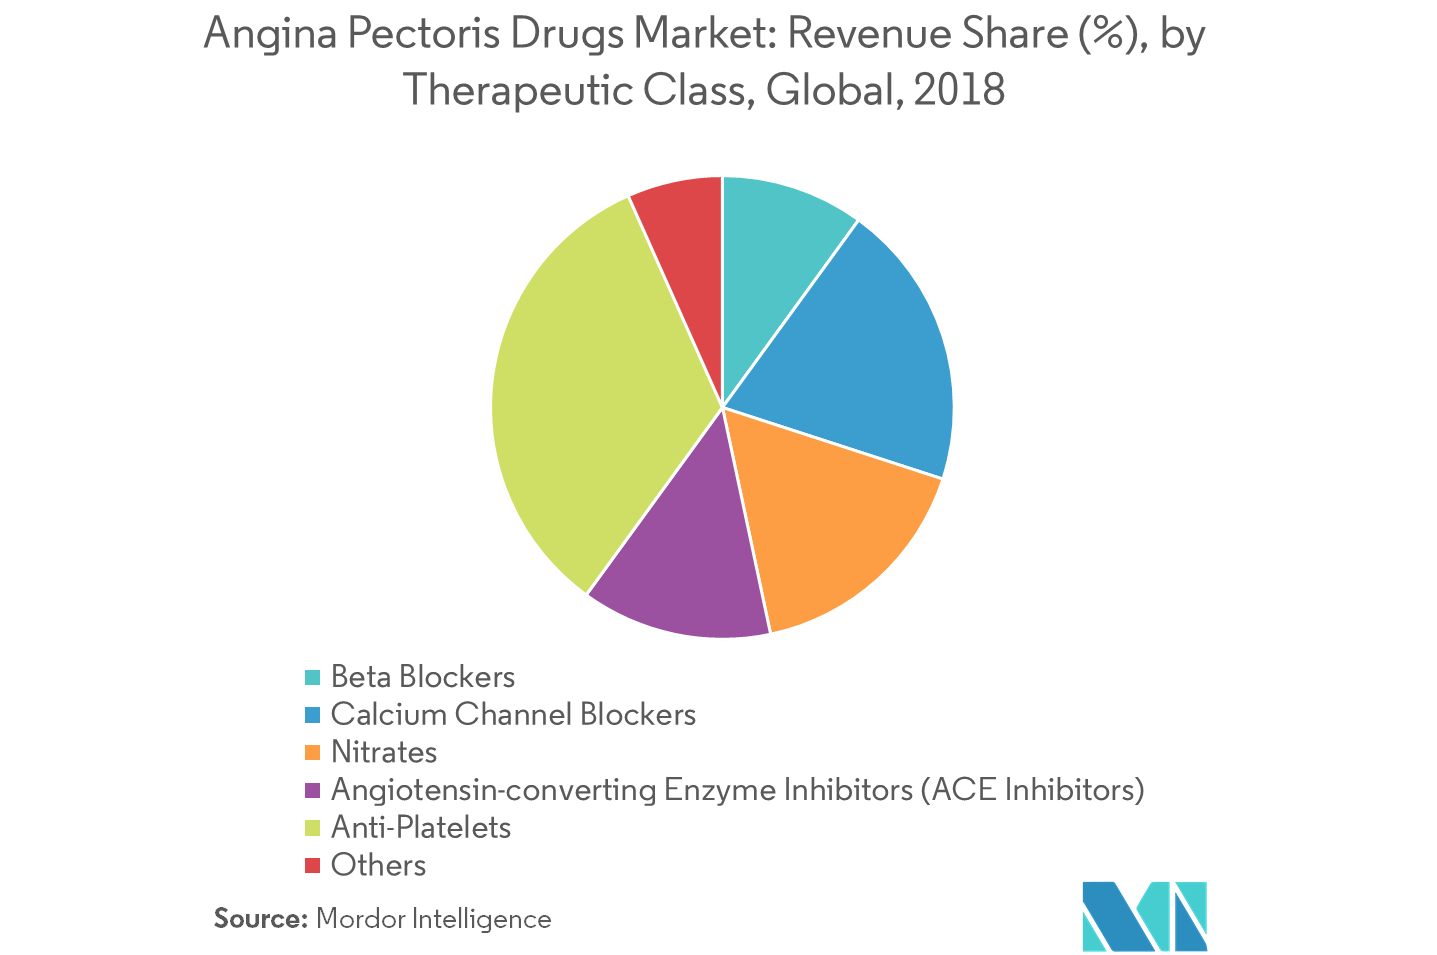  Angina Pectoris Drugs Market Key Trends